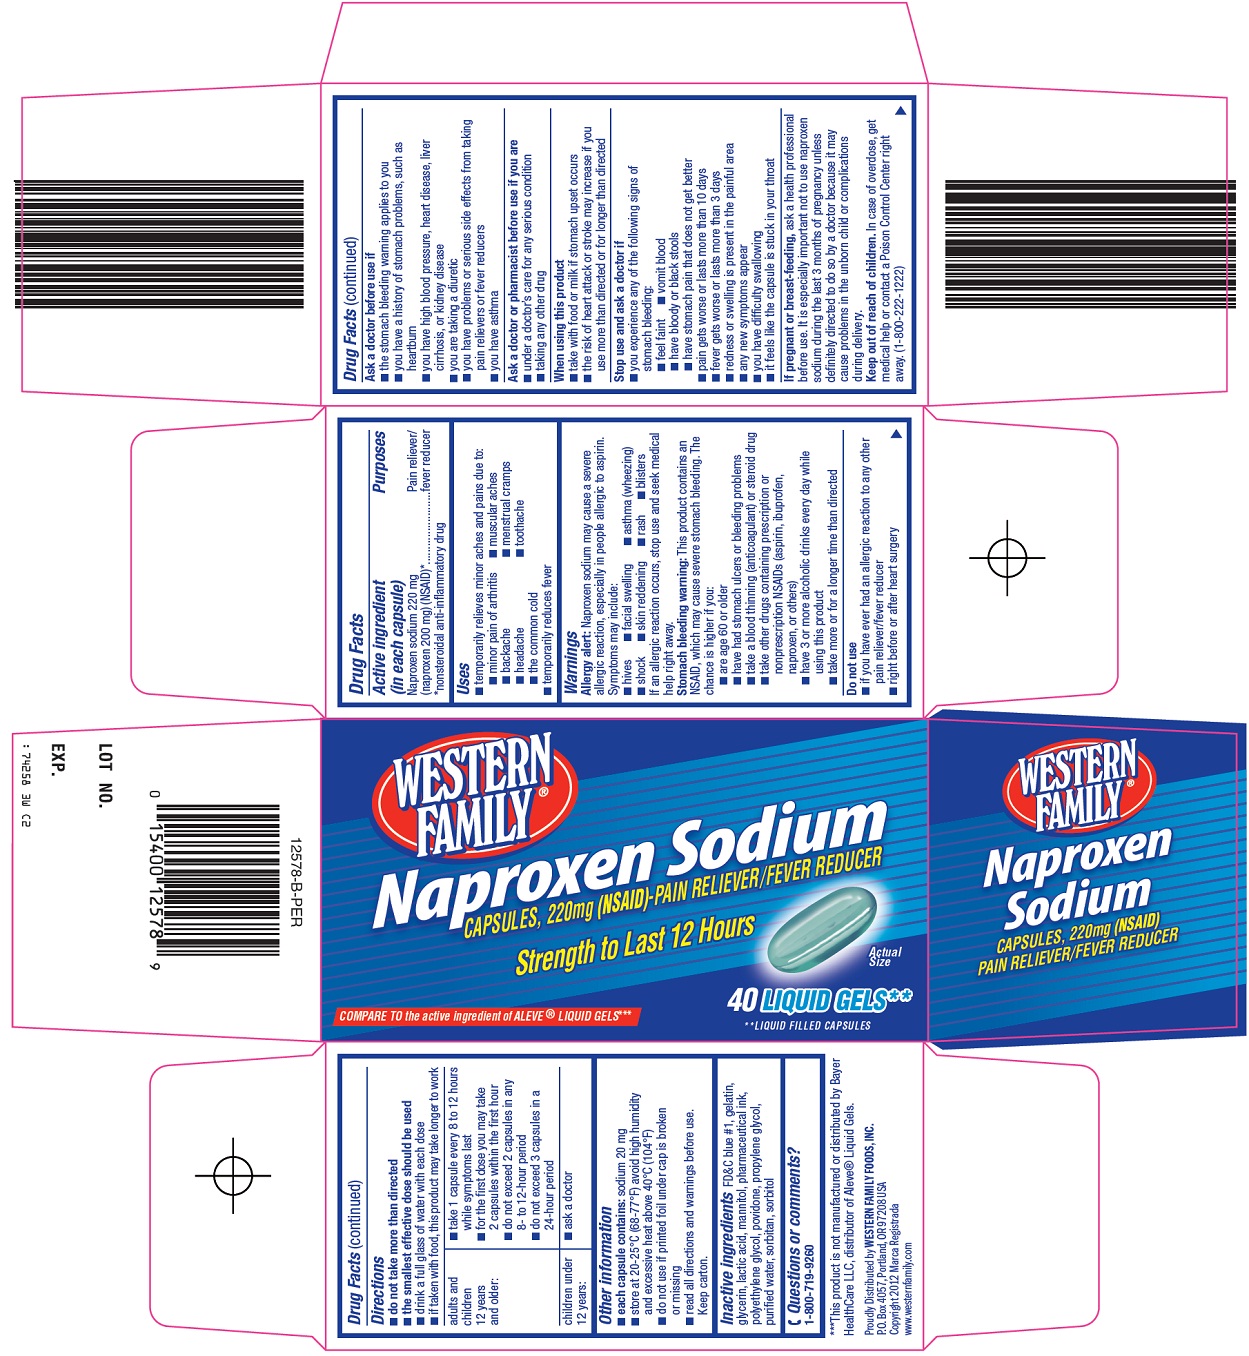 Naproxen Sodium Capsules, 220mg (NSAID) Carton Image